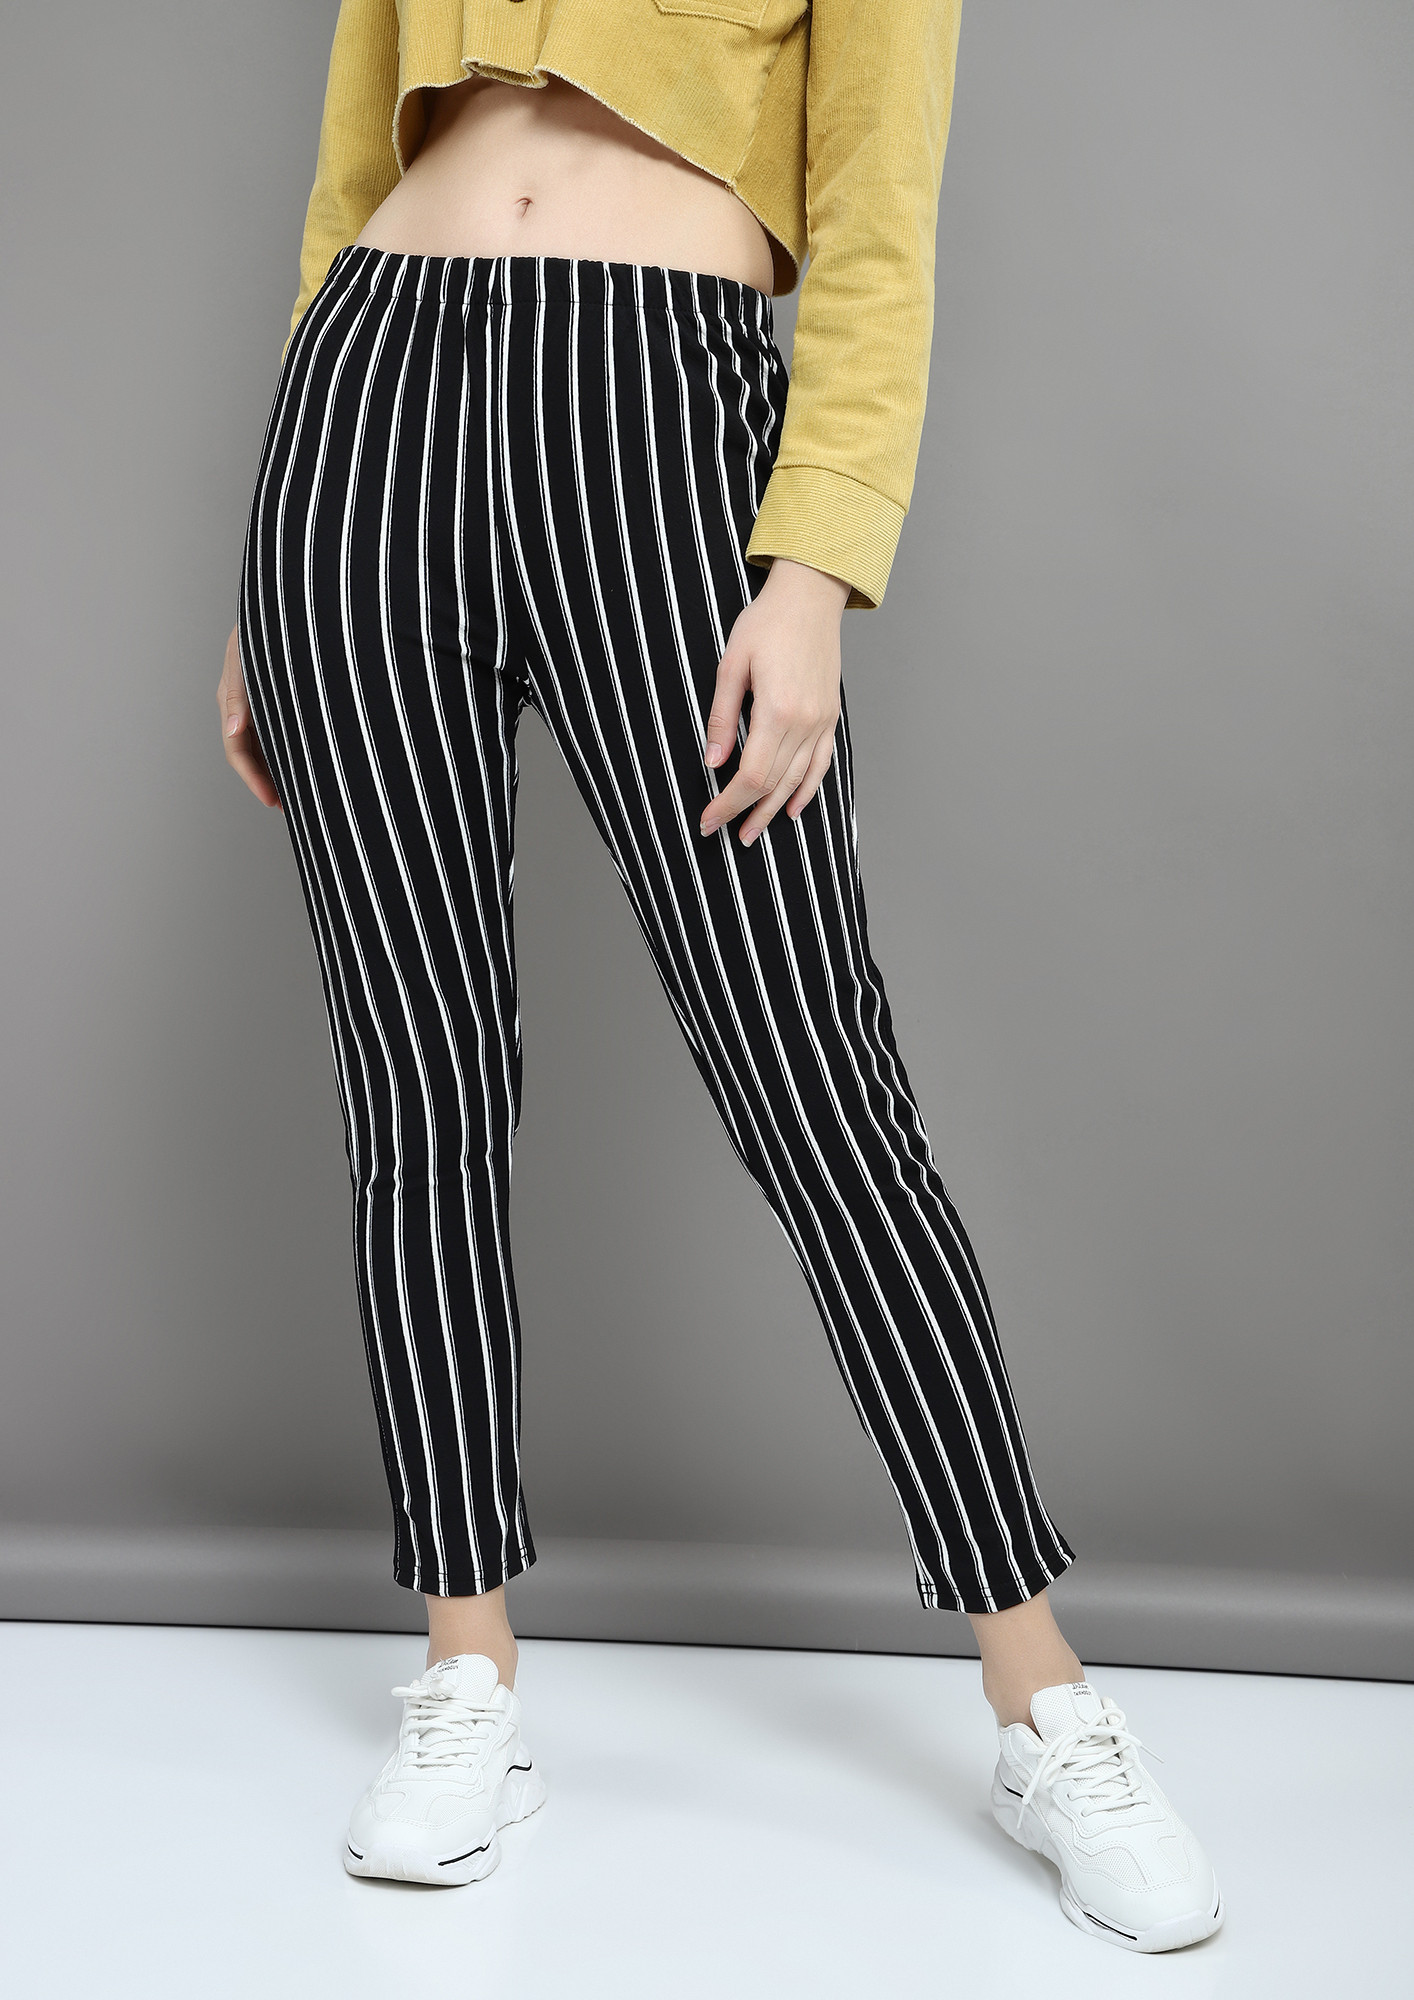 Buy Green Striped Pants For Women Online in India  VeroModa